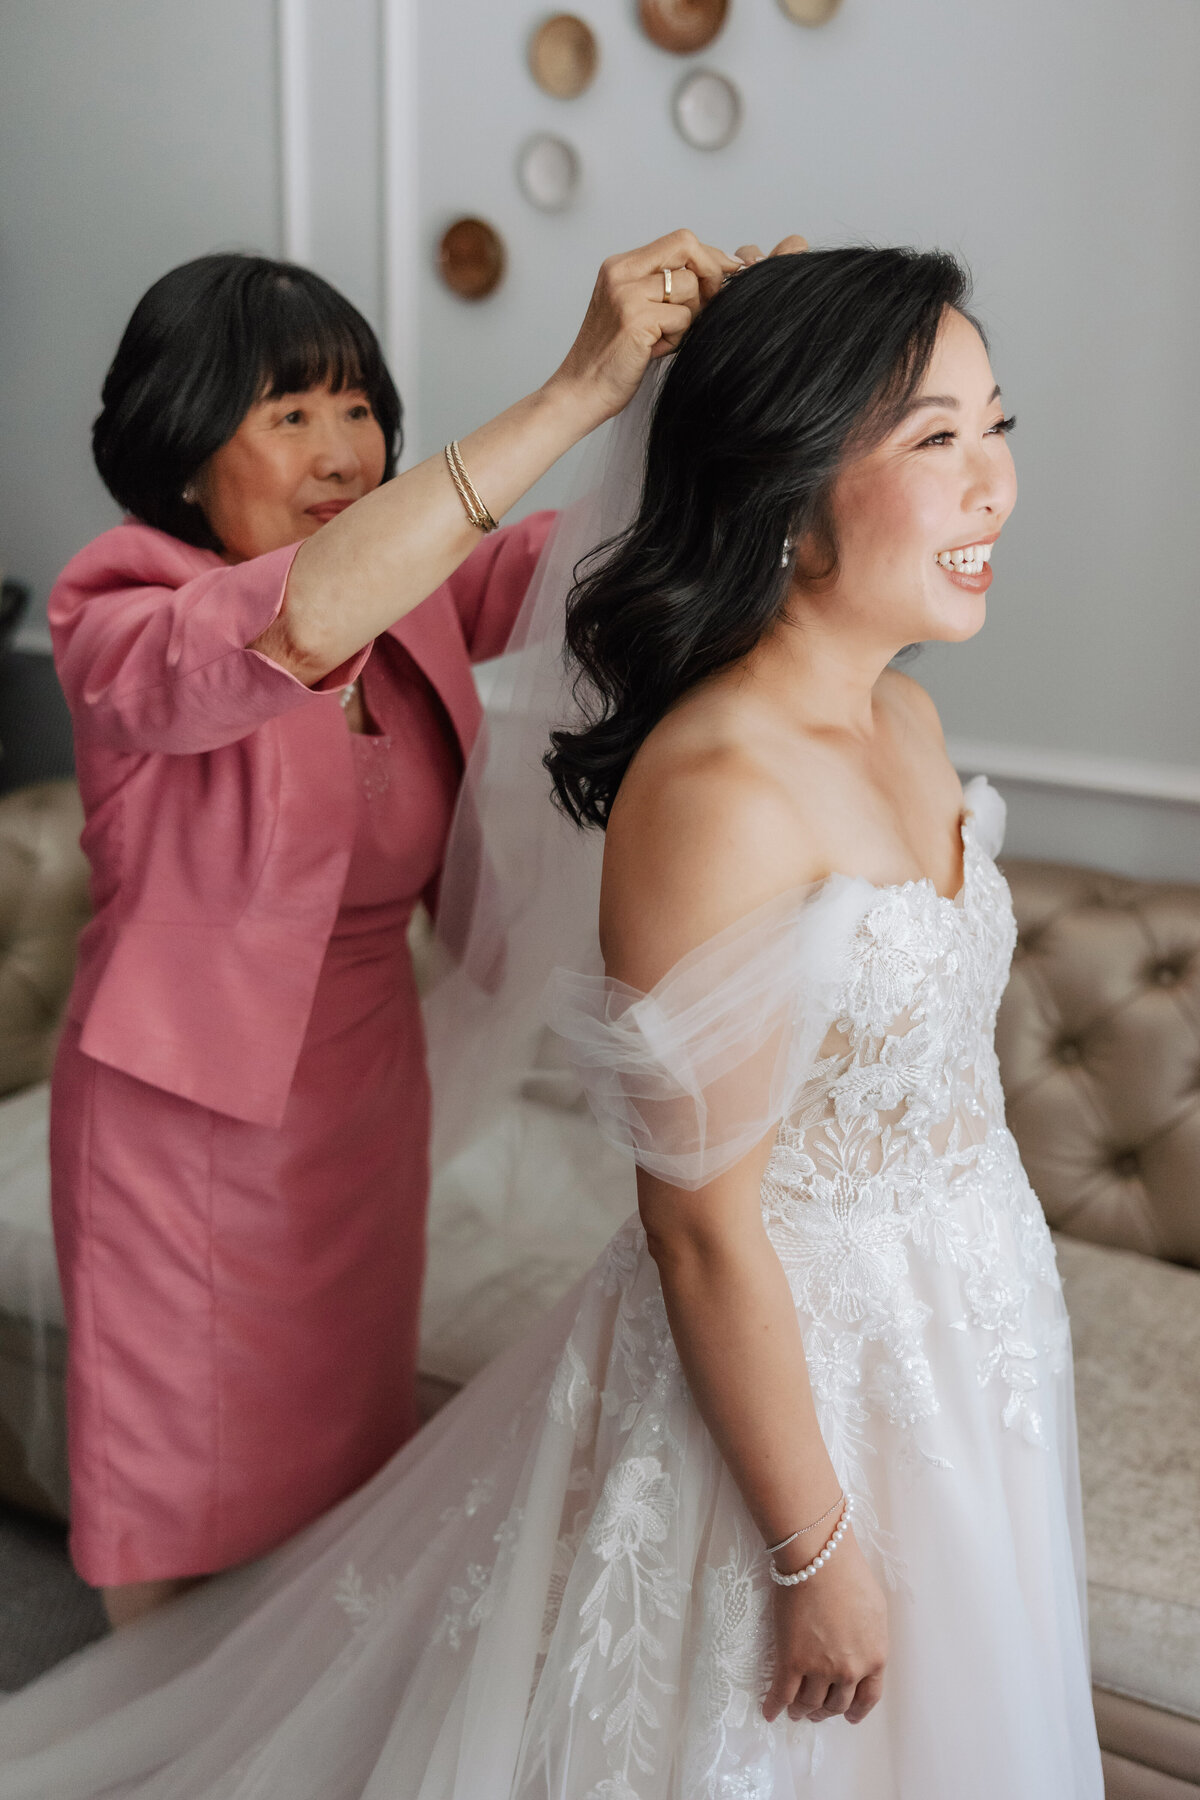 Harvard-art-museum-wedding-afterparty-dress-change-Erica-Renee-Beauty-bride-natural-wedding-hair-makeup-clean-artist-stylist-Asian-mother